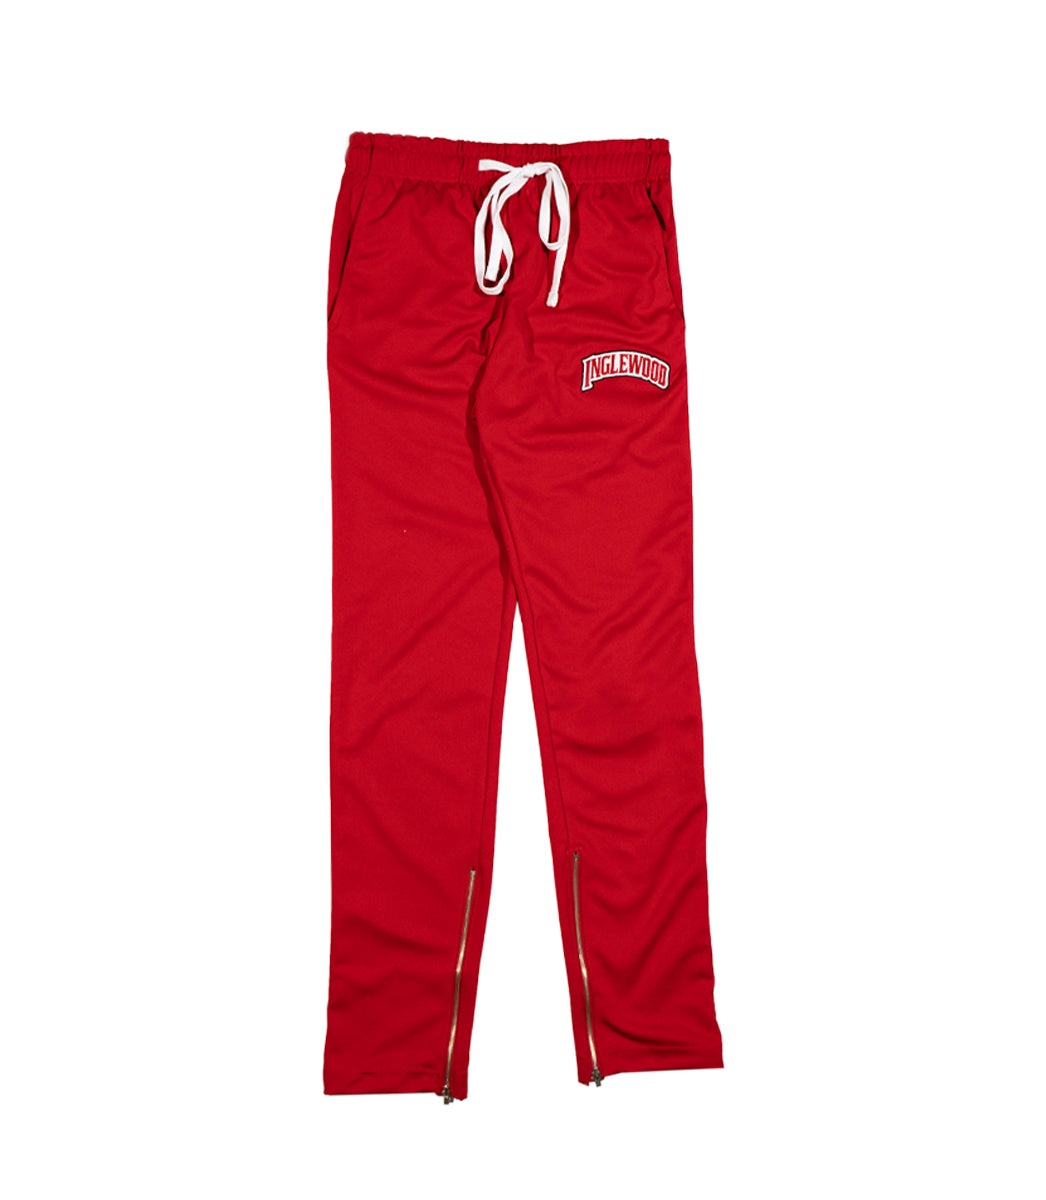 INGLEWOOD TRACK PANTS RED - INGLEWOOD CLOTHING LINE